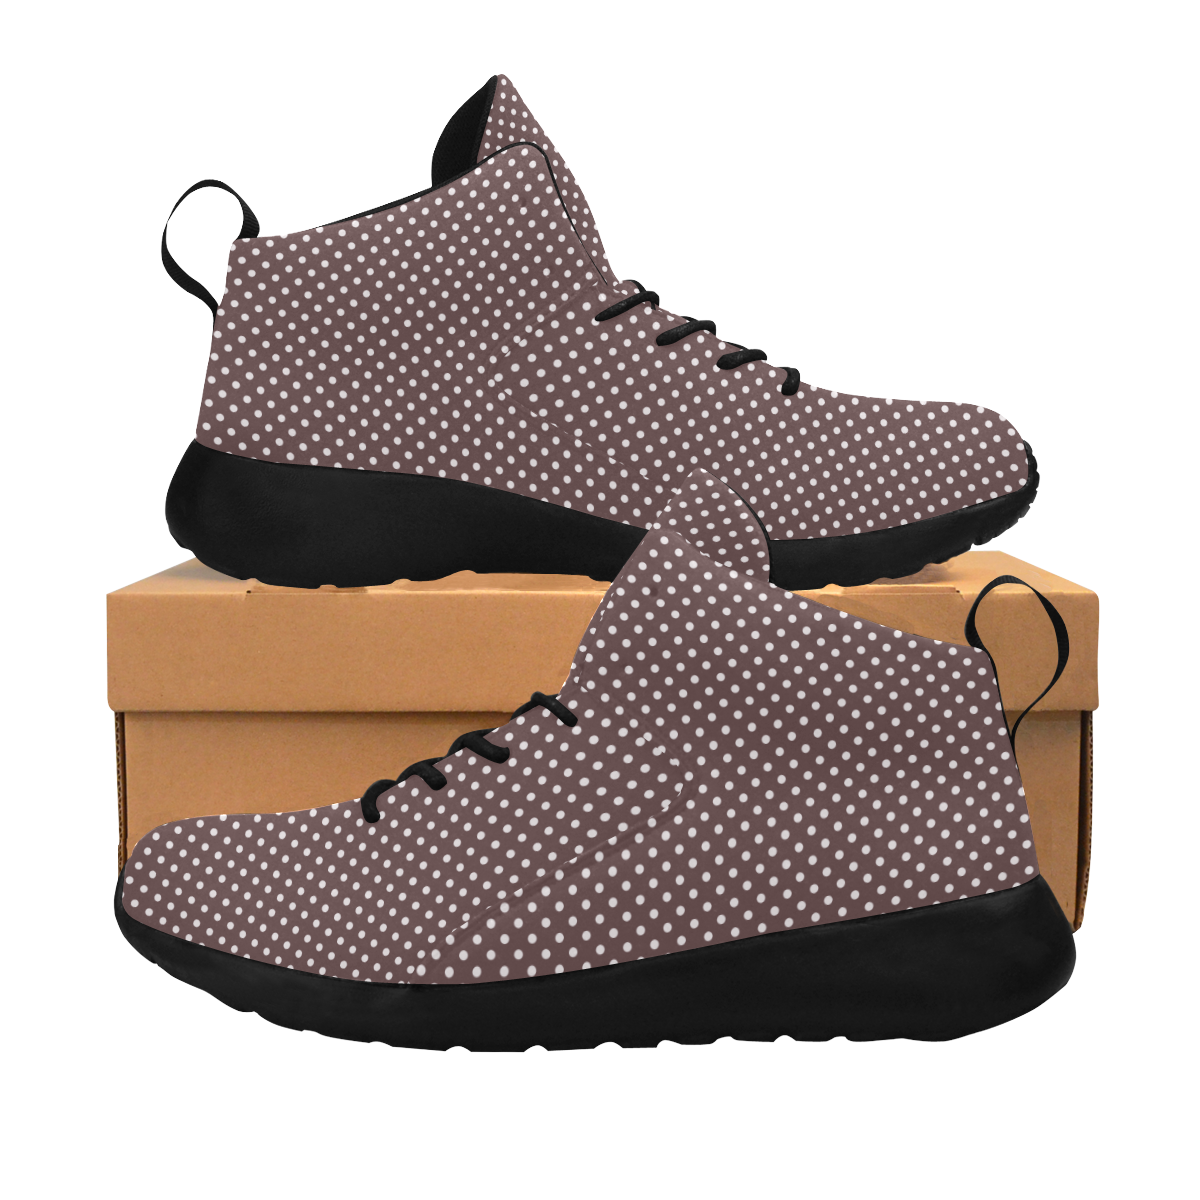 Chocolate brown polka dots Women's Chukka Training Shoes/Large Size (Model 57502)